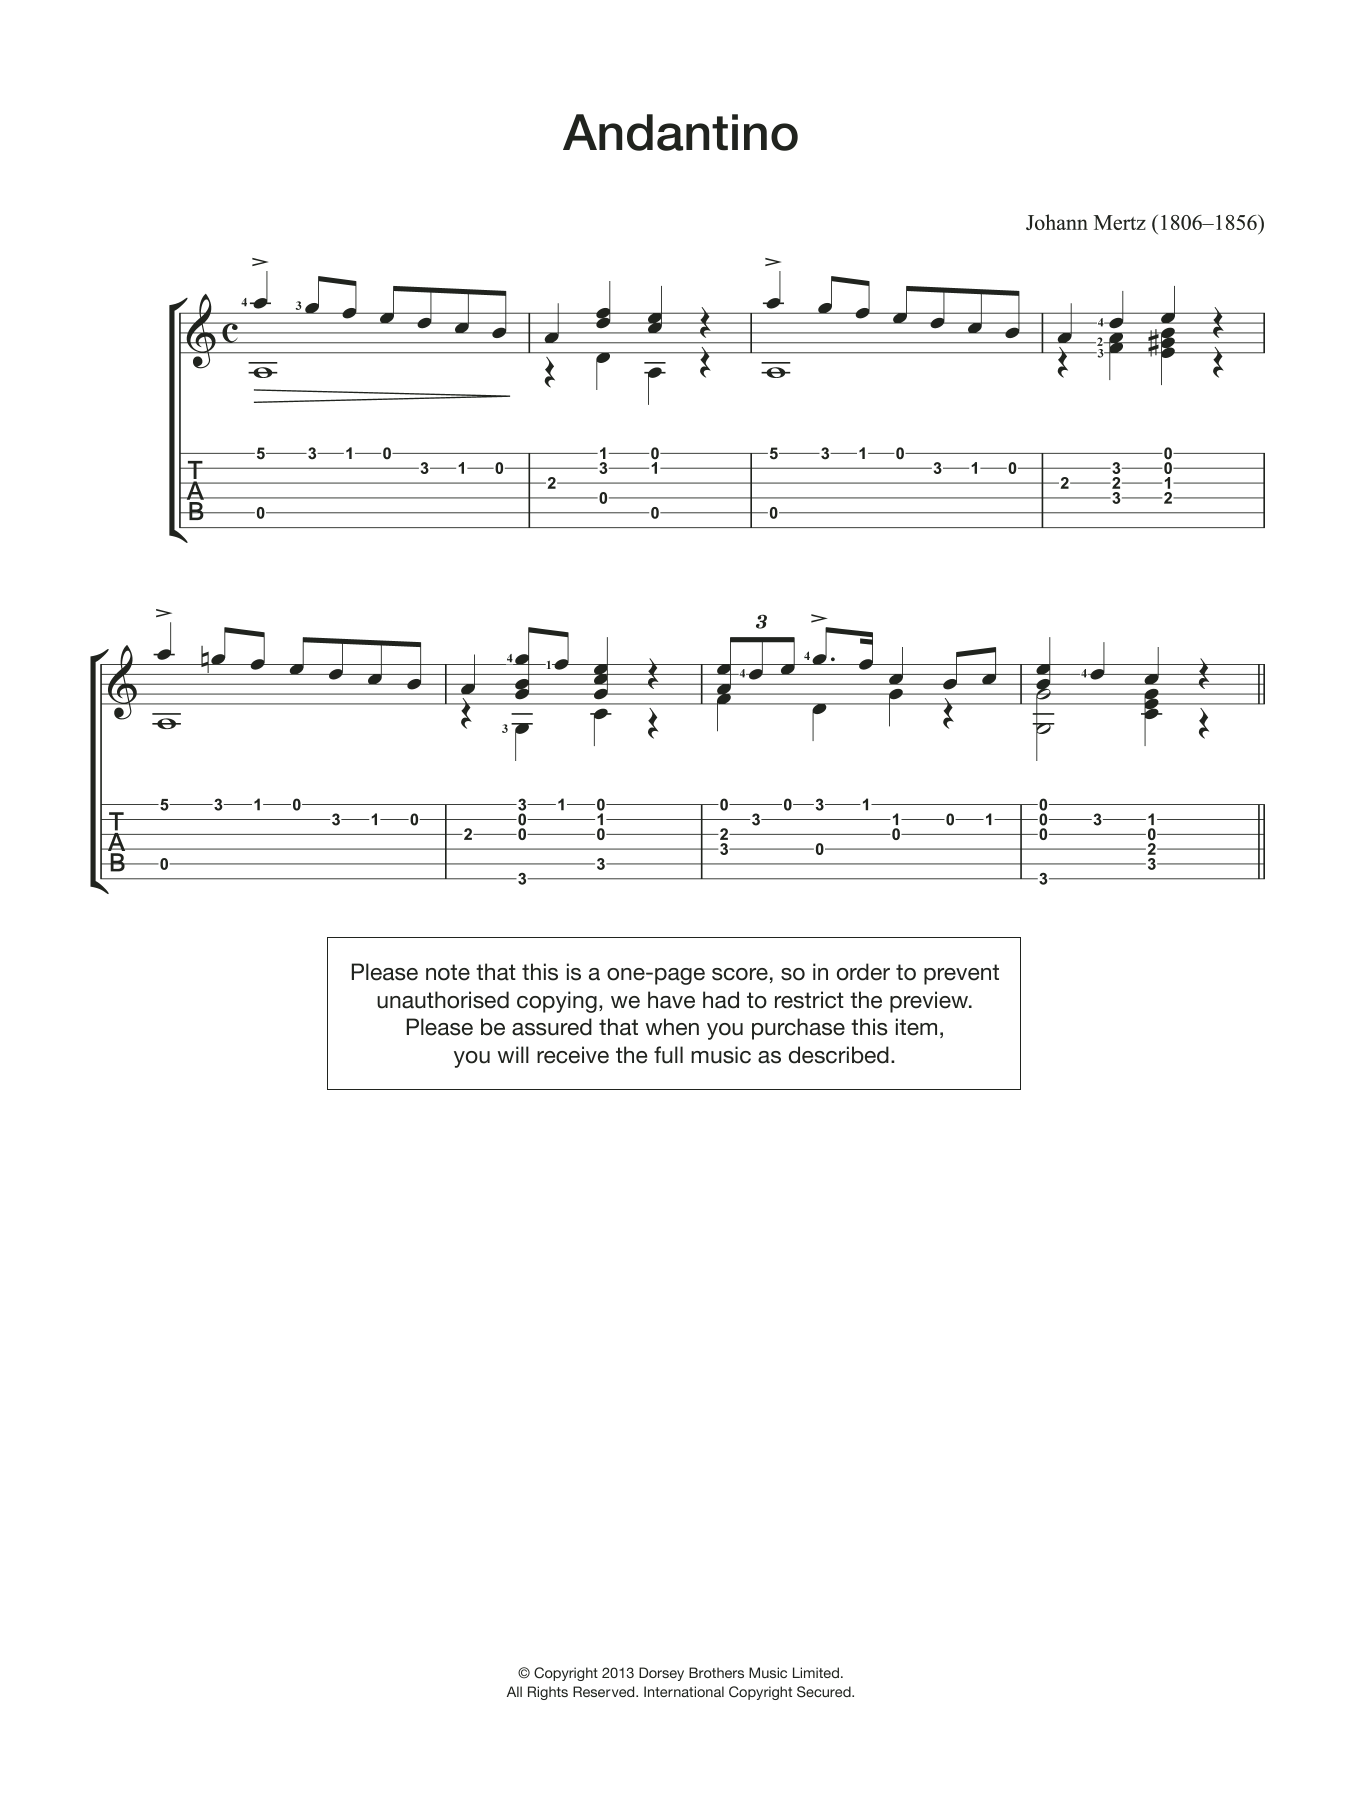 Johann Kaspar Mertz Andantino Sheet Music Notes & Chords for Guitar - Download or Print PDF